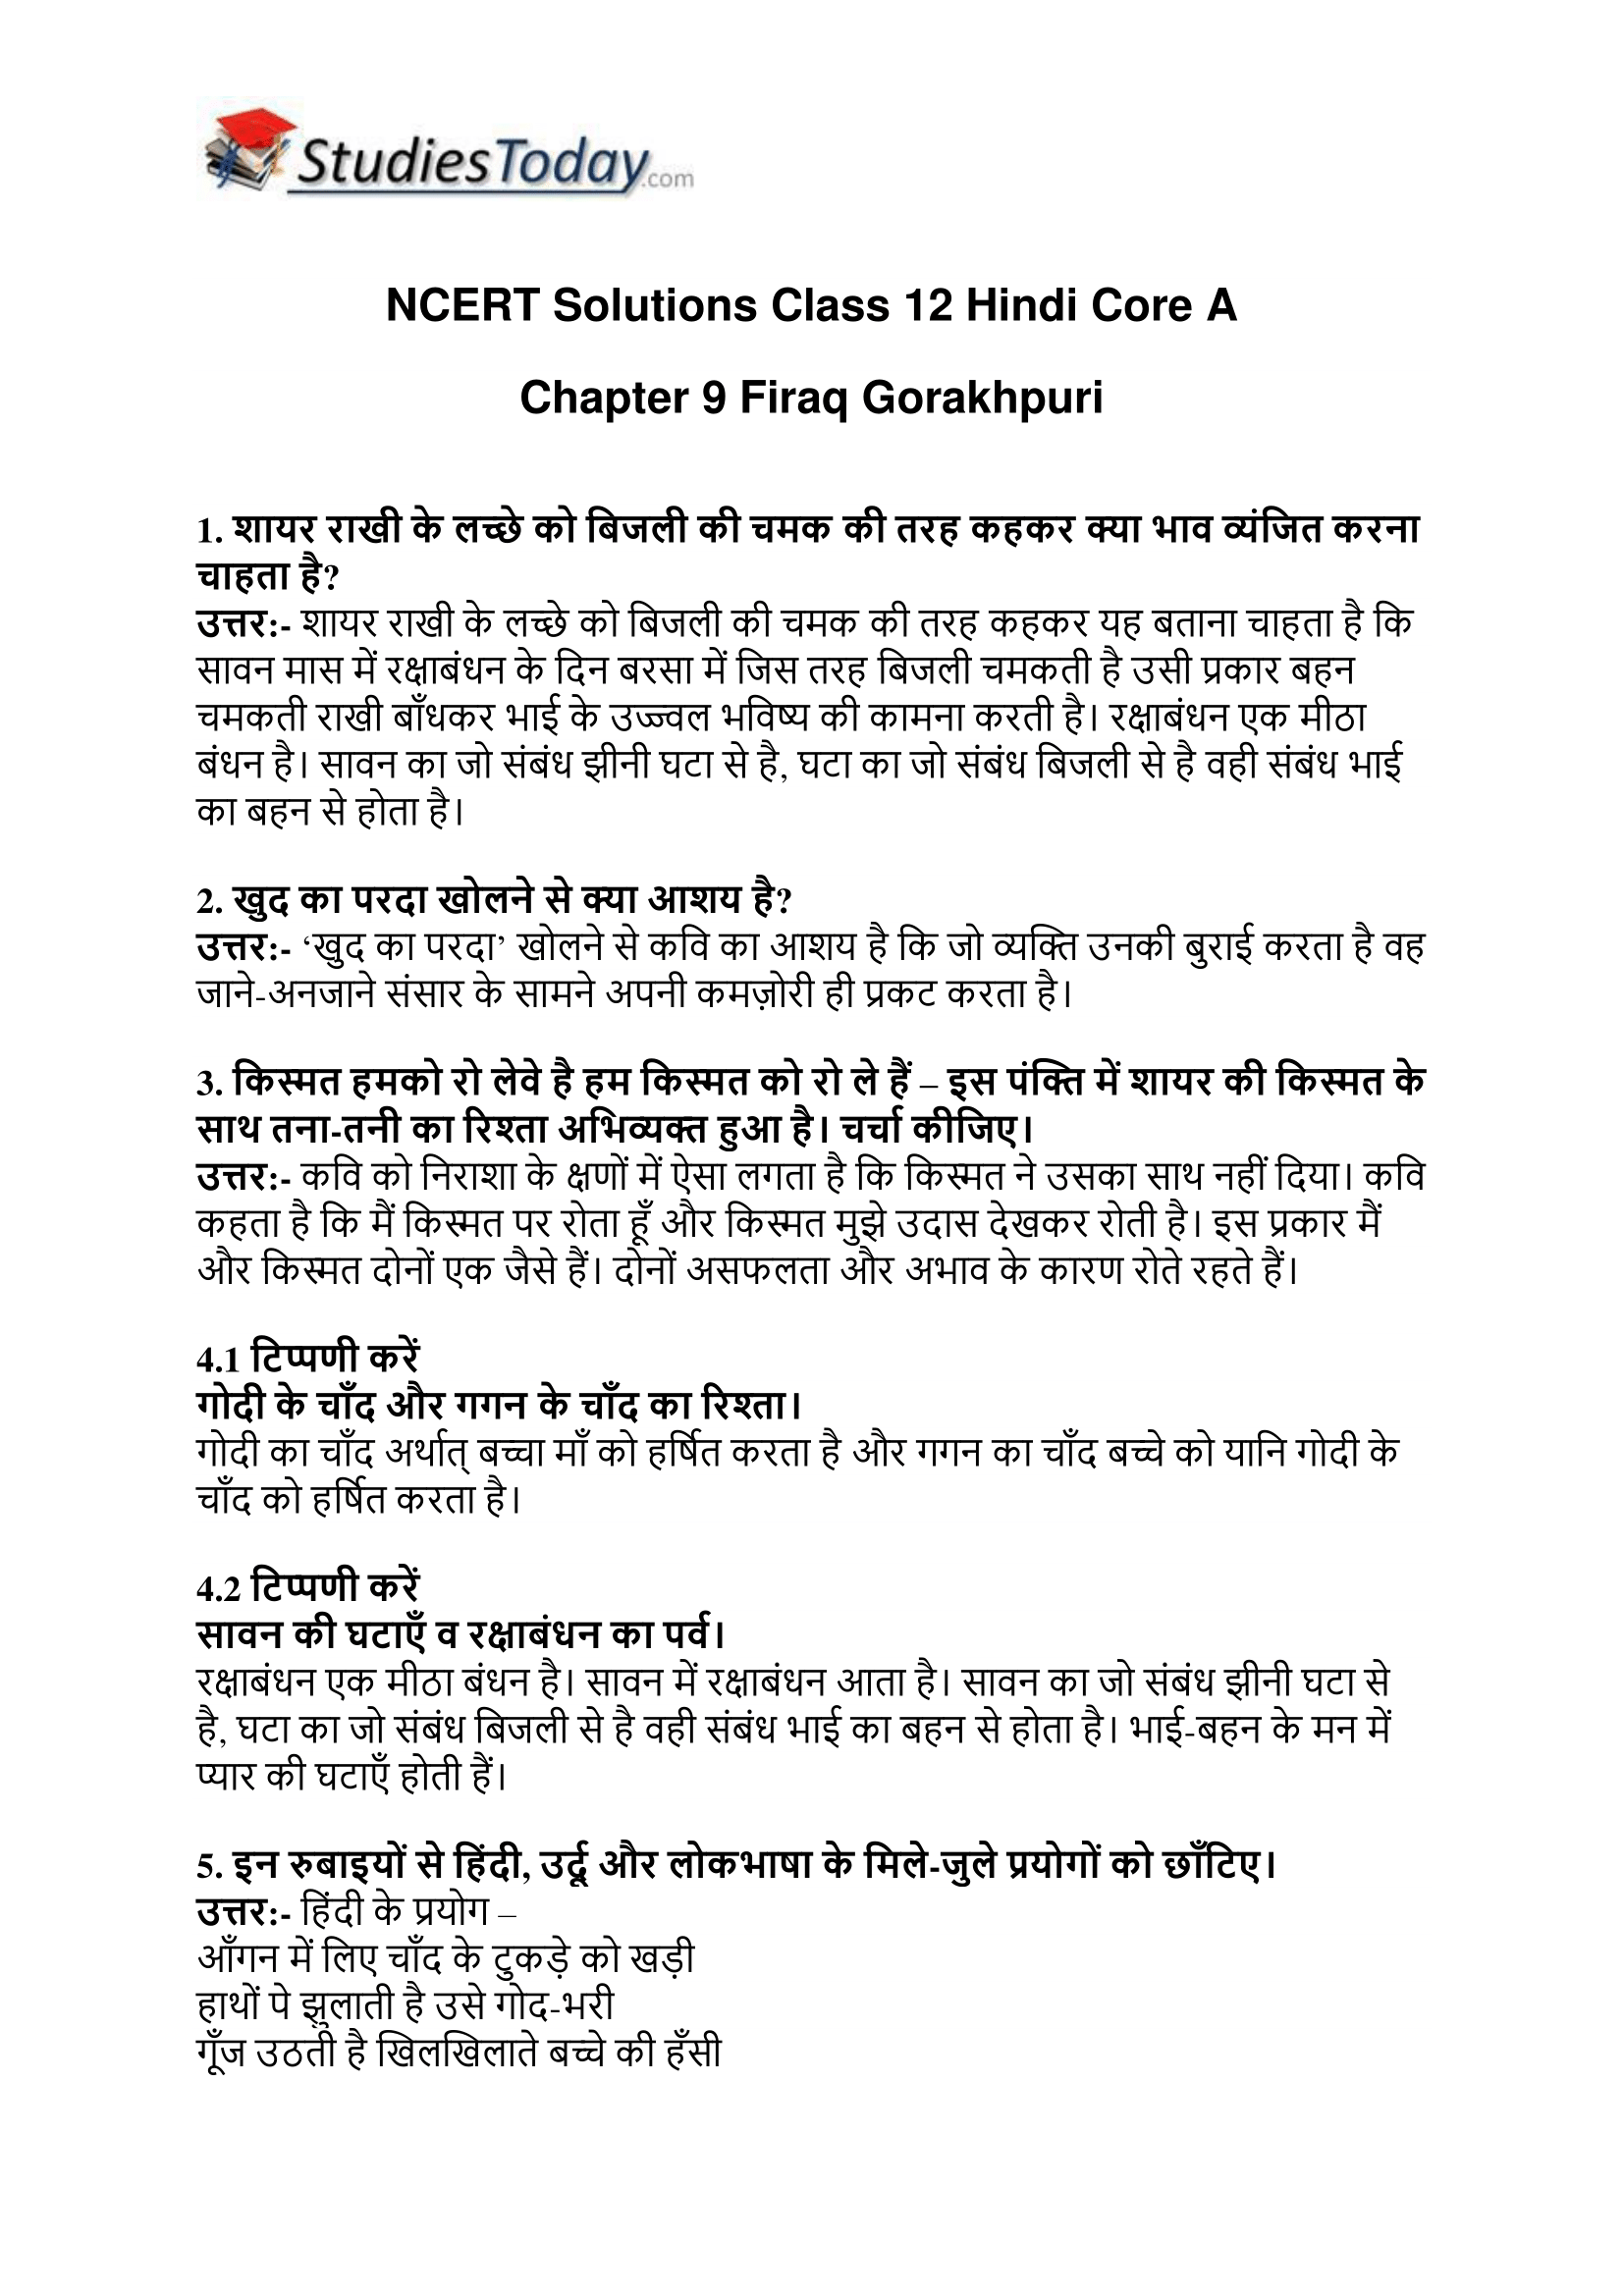 ncert-solutions-class-12-hindi-core-a-chapter-9-firaq-gorakhpuri-1